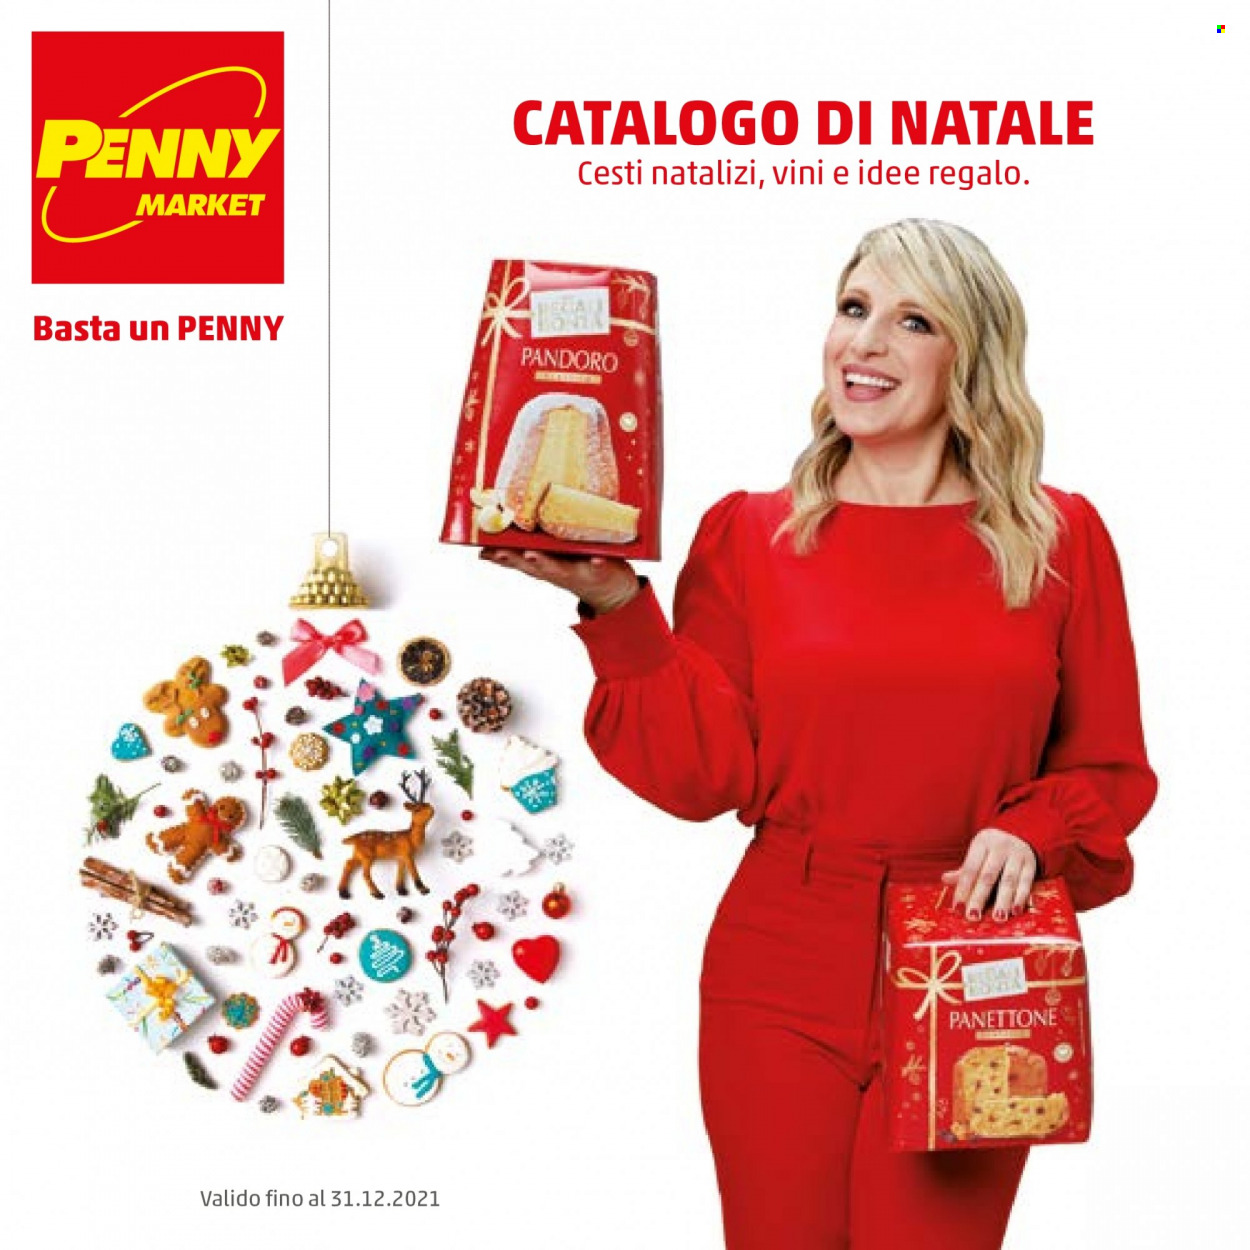 thumbnail - Volantino Penny Market - 9/11/2021 - 31/12/2021 - Prodotti in offerta - pandoro, panettone. Pagina 1.